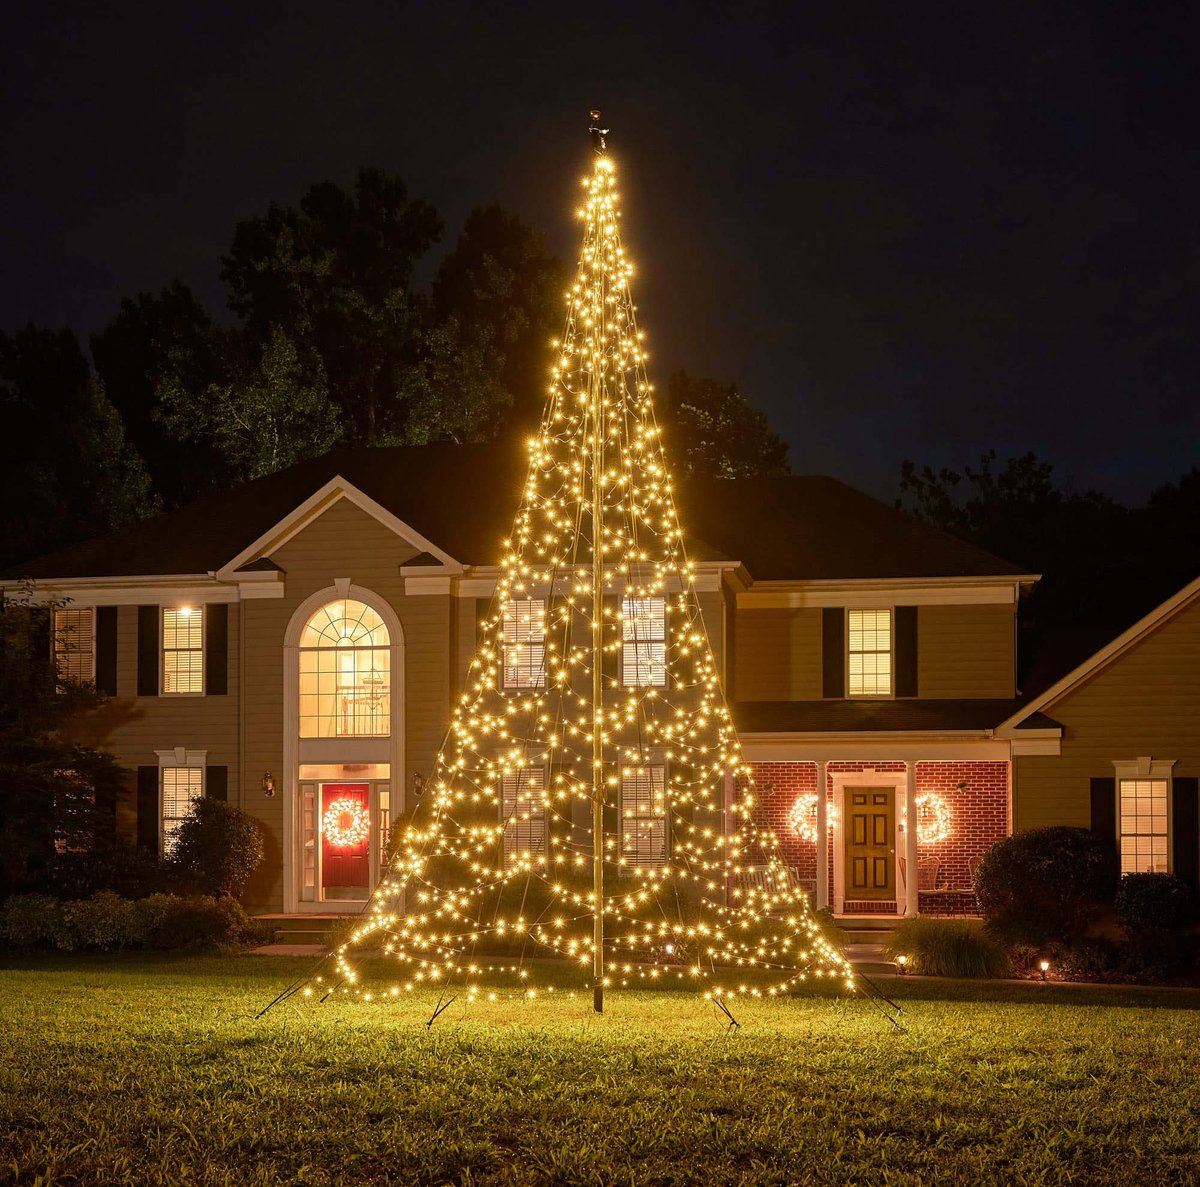 Fairybell vlaggenmast kerstboom - 600 cm - 1.200 twinkelende & warm witte ledlampjes - exclusief vlaggenmast